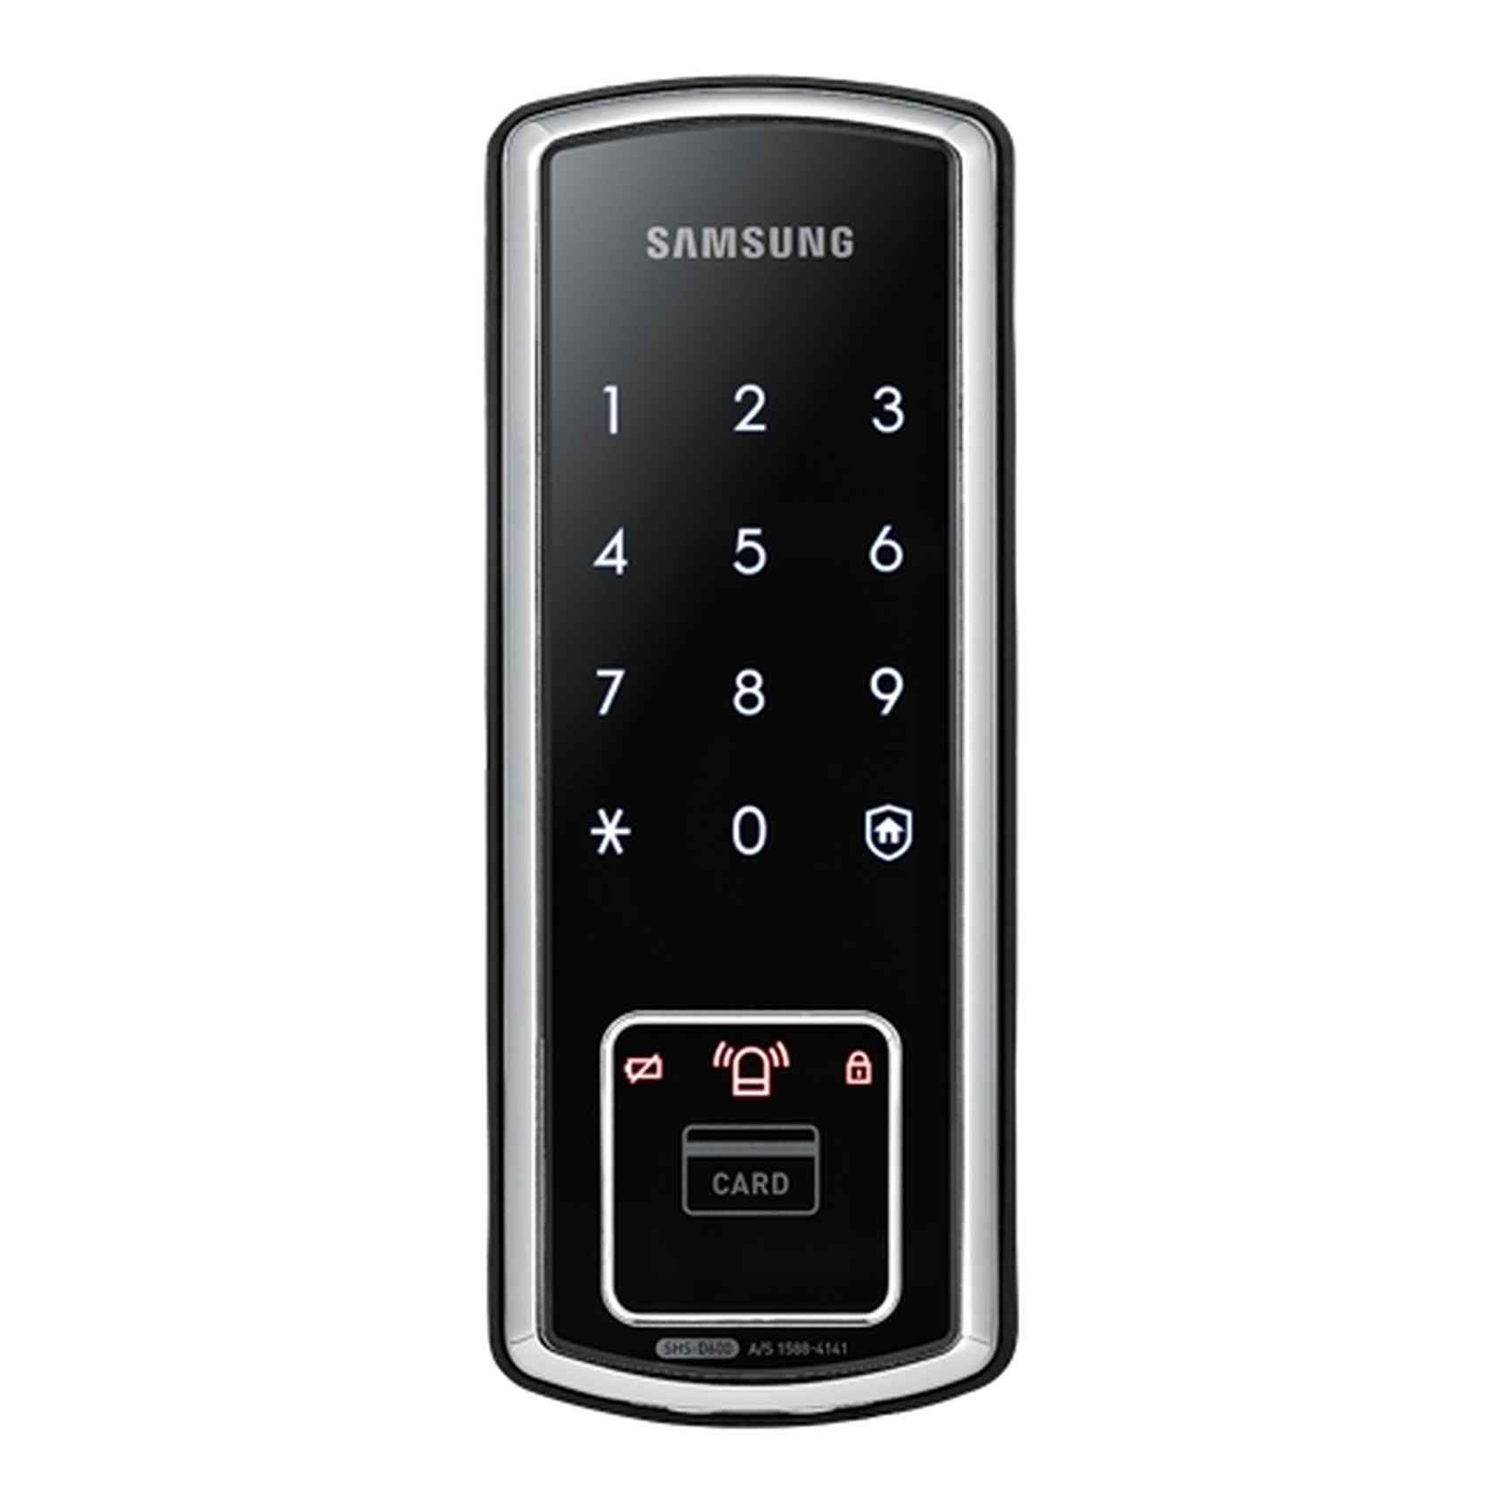 Samsung Rim Locks SHS-D600 - Limota.vn - Cung cấp thiết bị & Giải ...